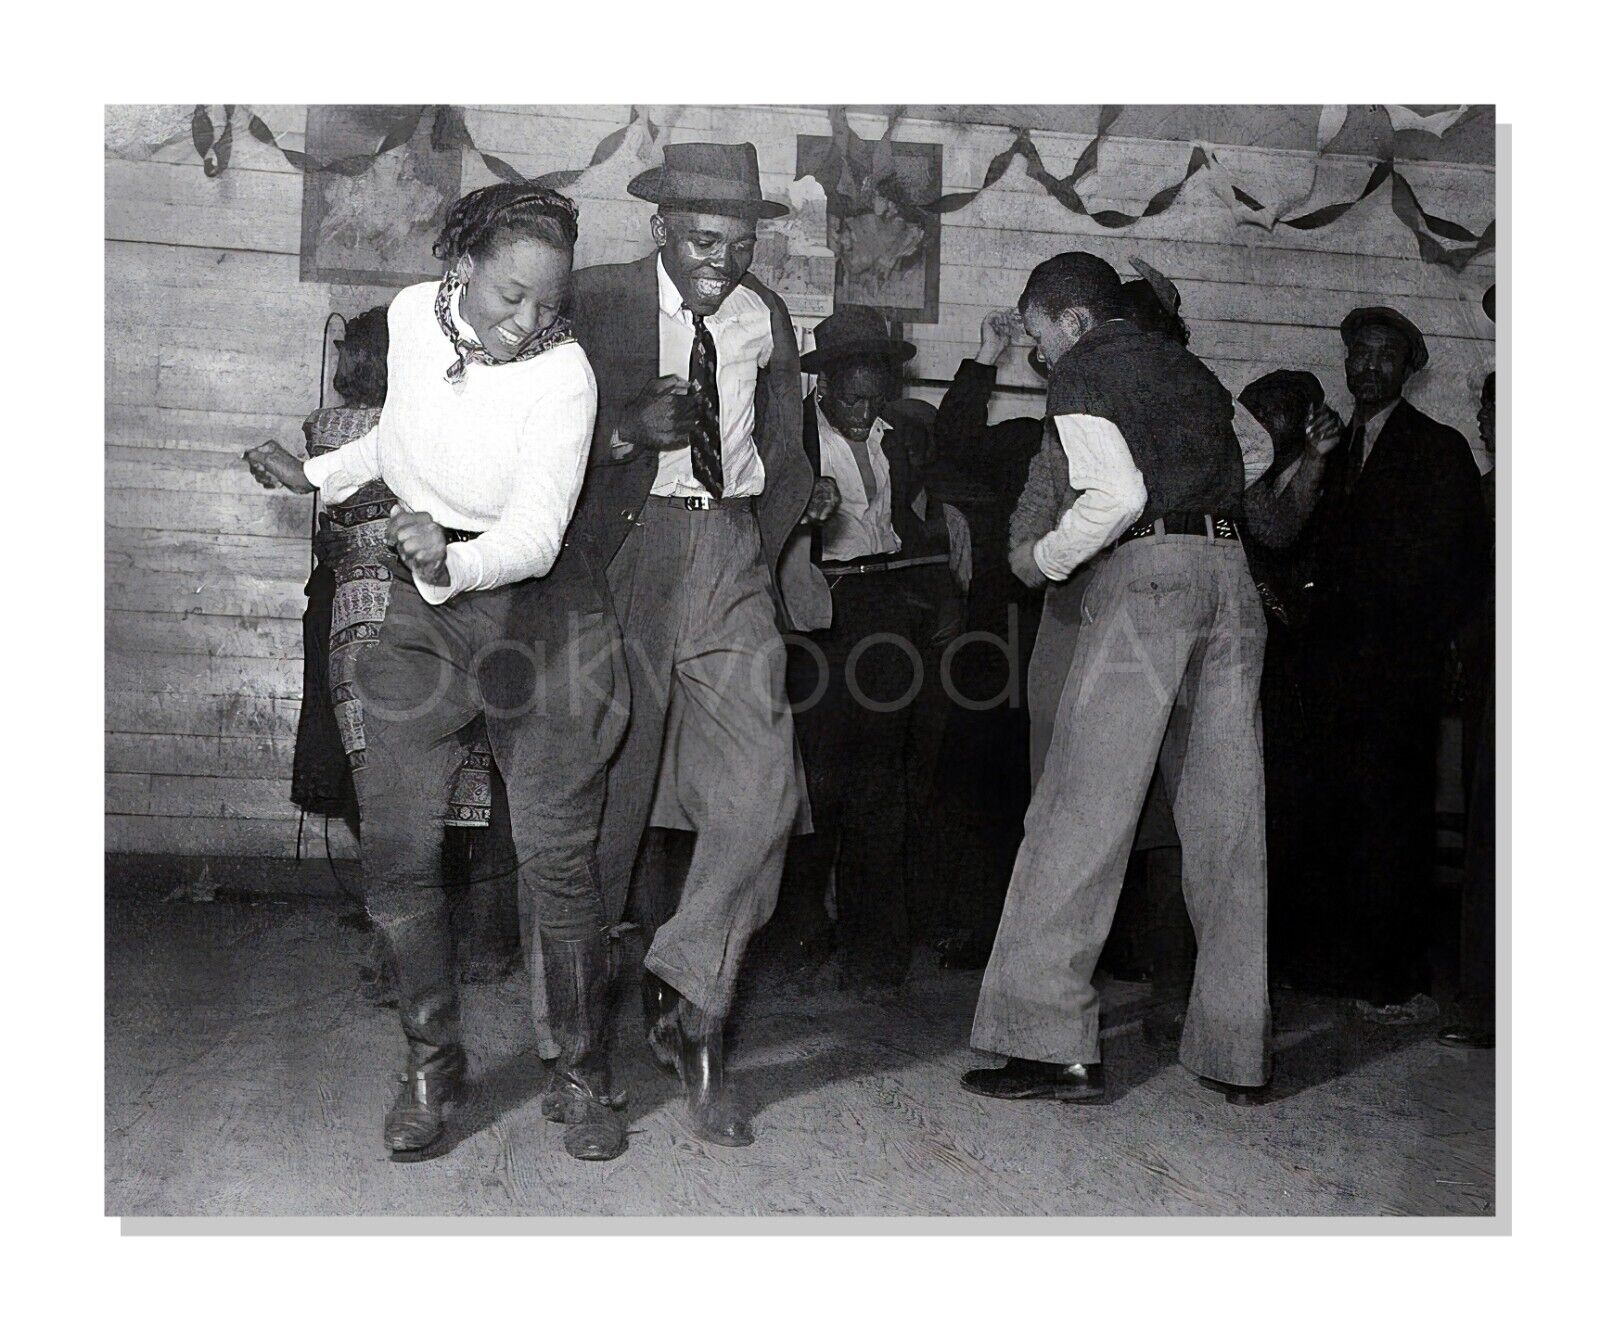 Jitterbugging at the Juke Joint  - Black Folks Dancing - Vintage Photo Reprint